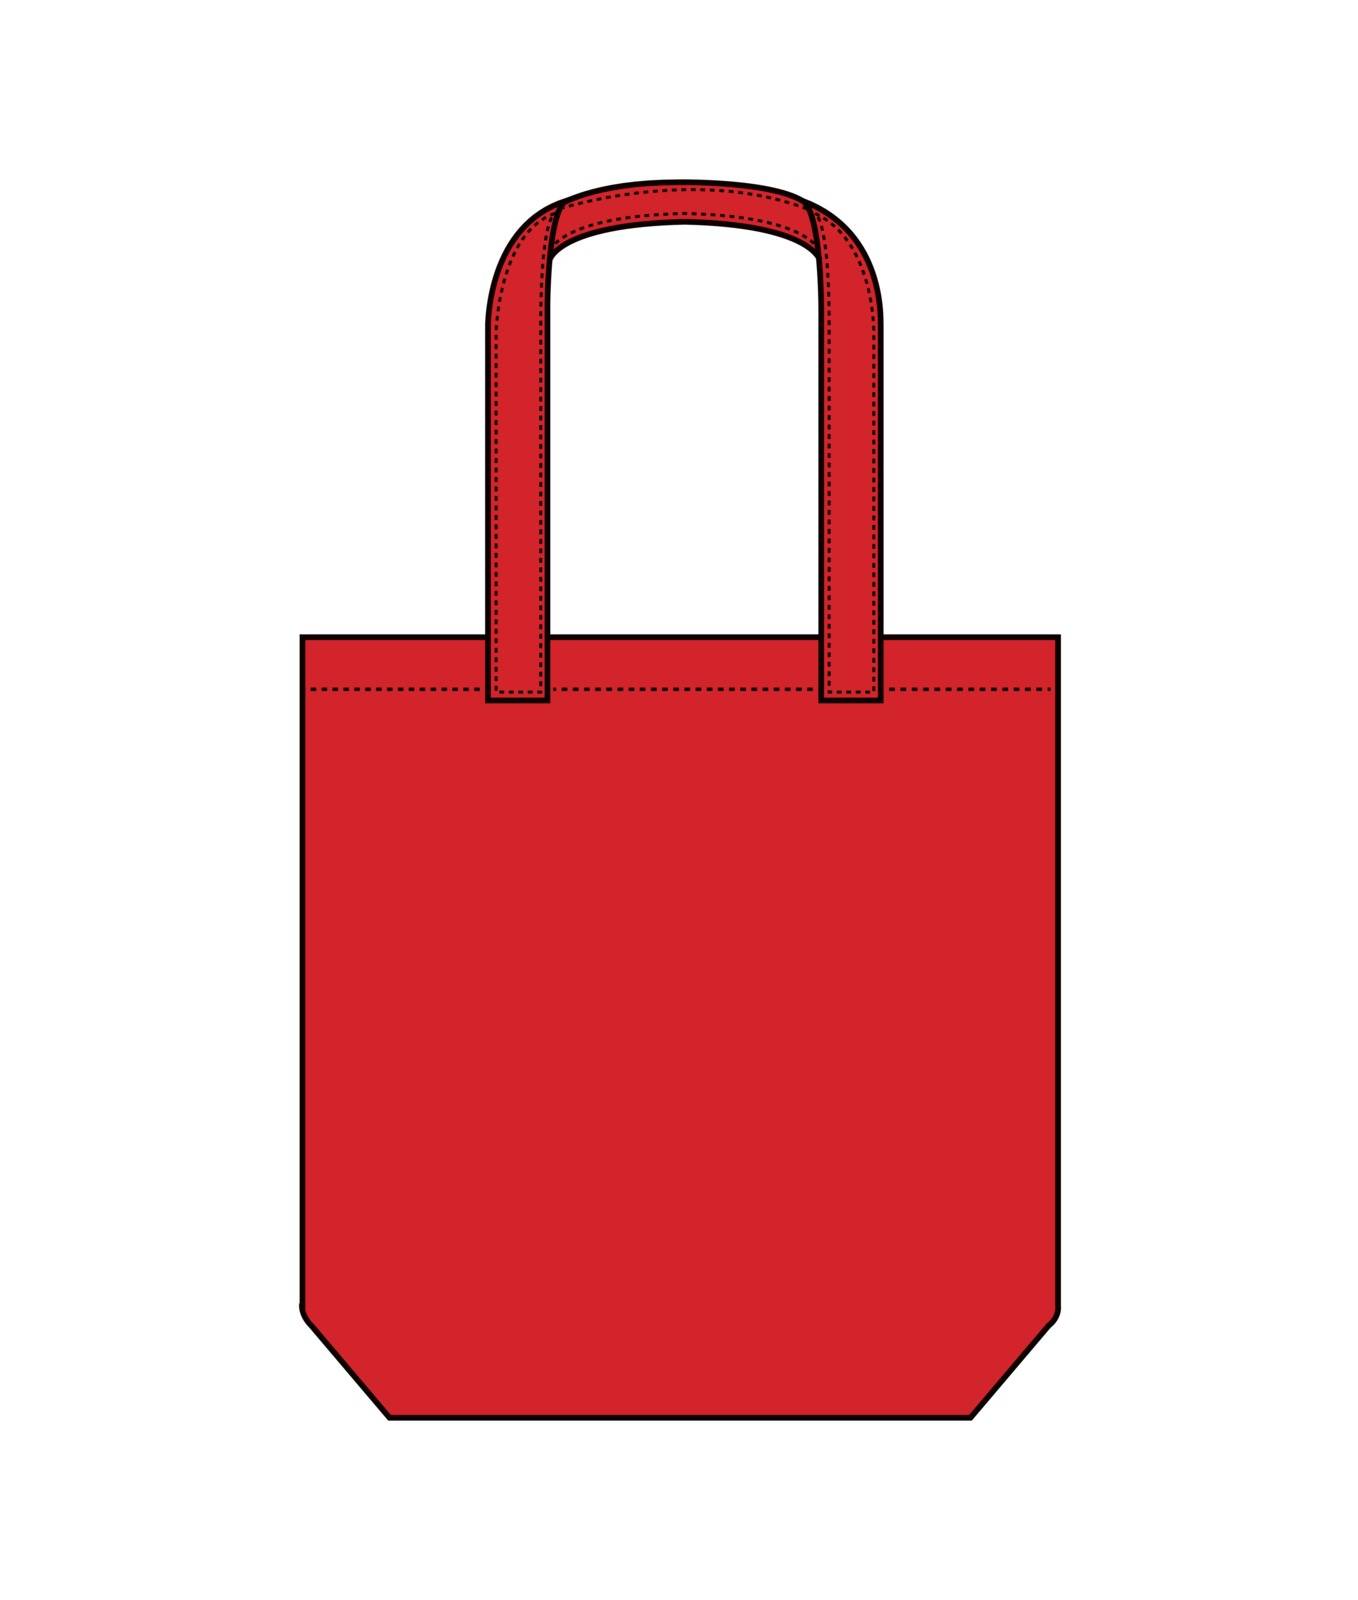 Tote bag / shopping bag / eco bag template illustration